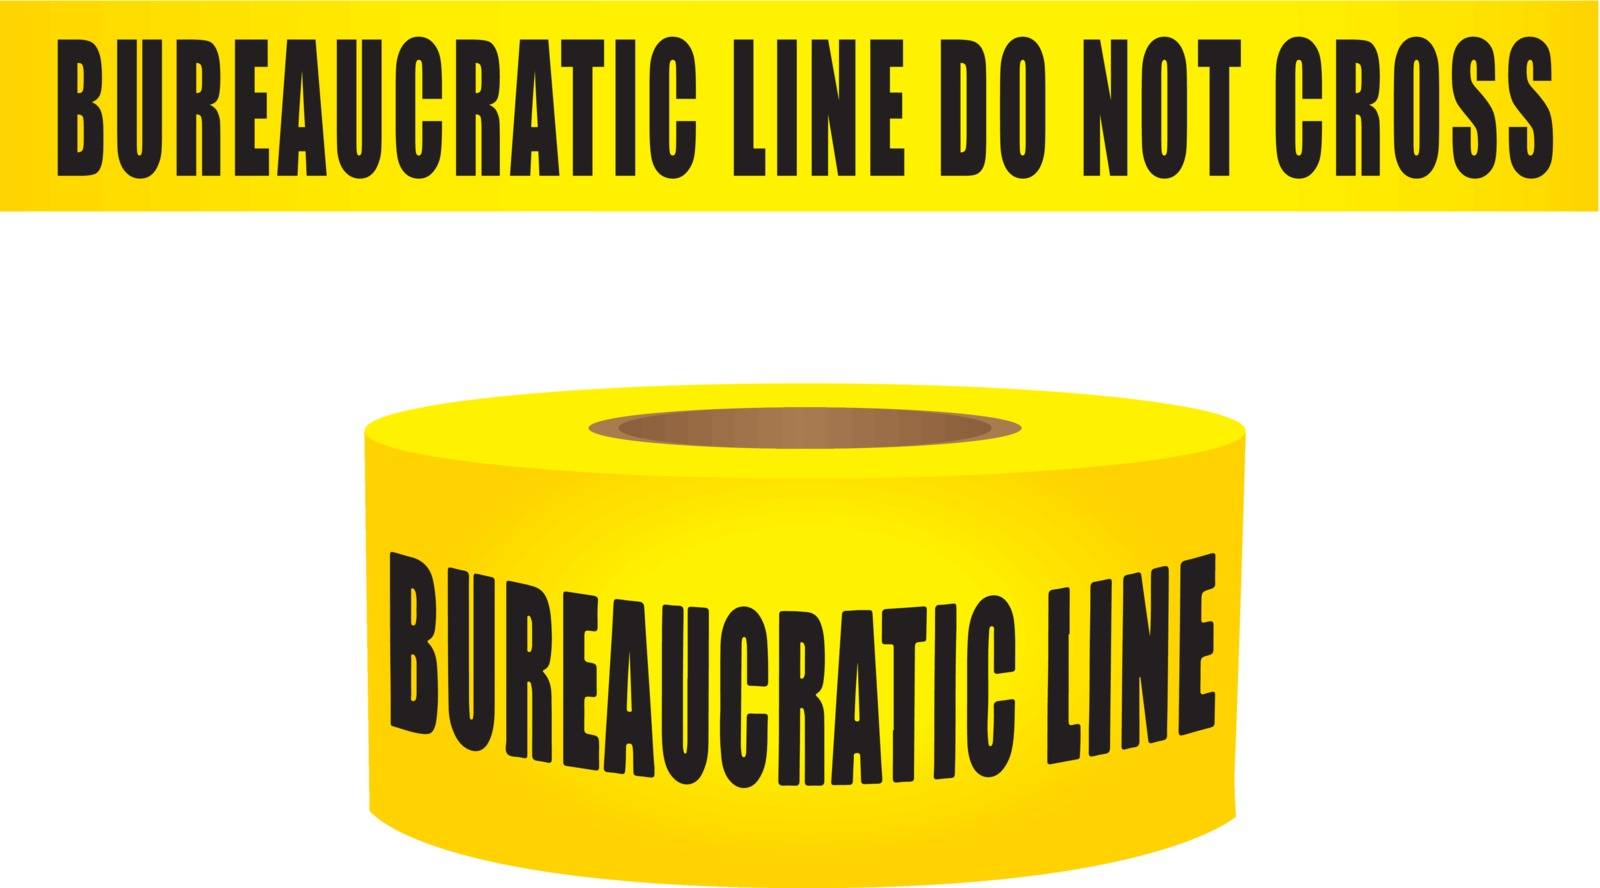 Bureaucratic line do not cross by VIPDesignUSA